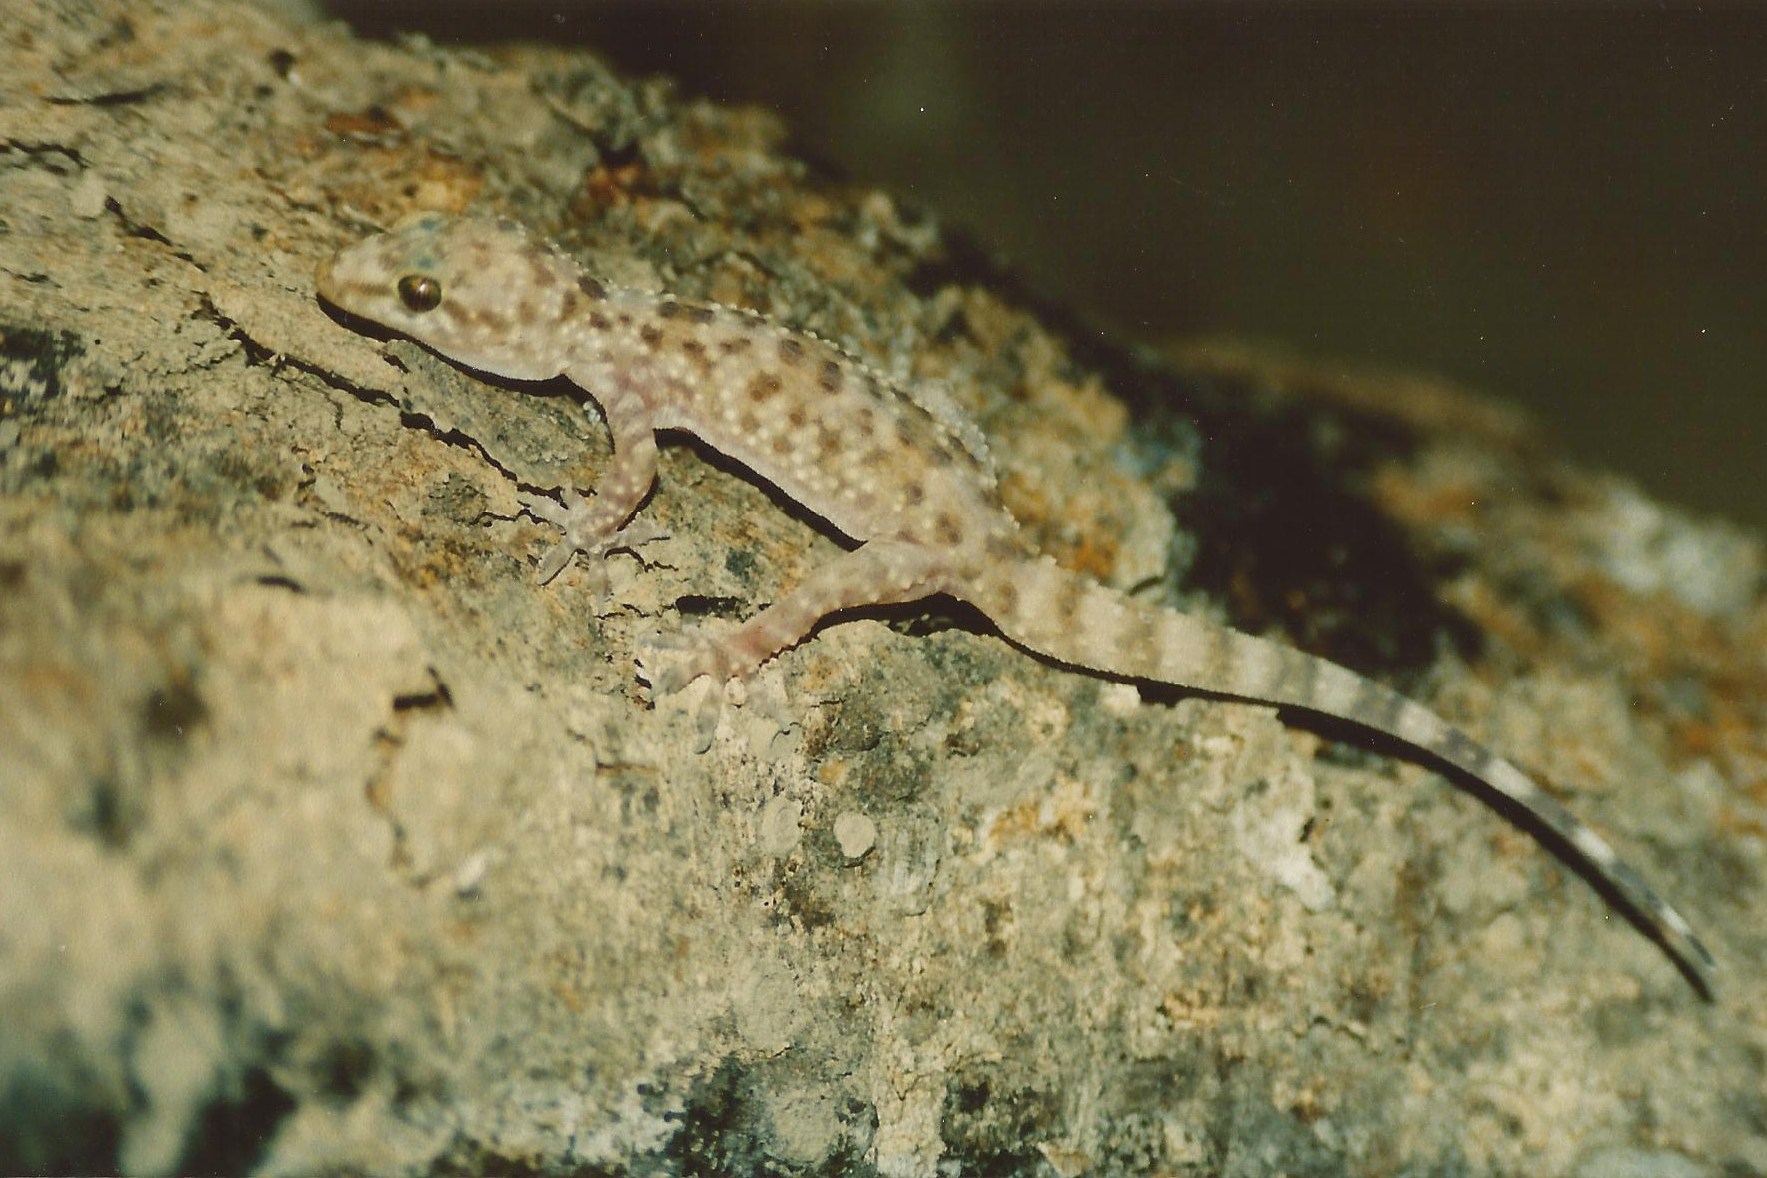 Mediterranean House Gecko | Reptile & Amphibian Discovery Zoo